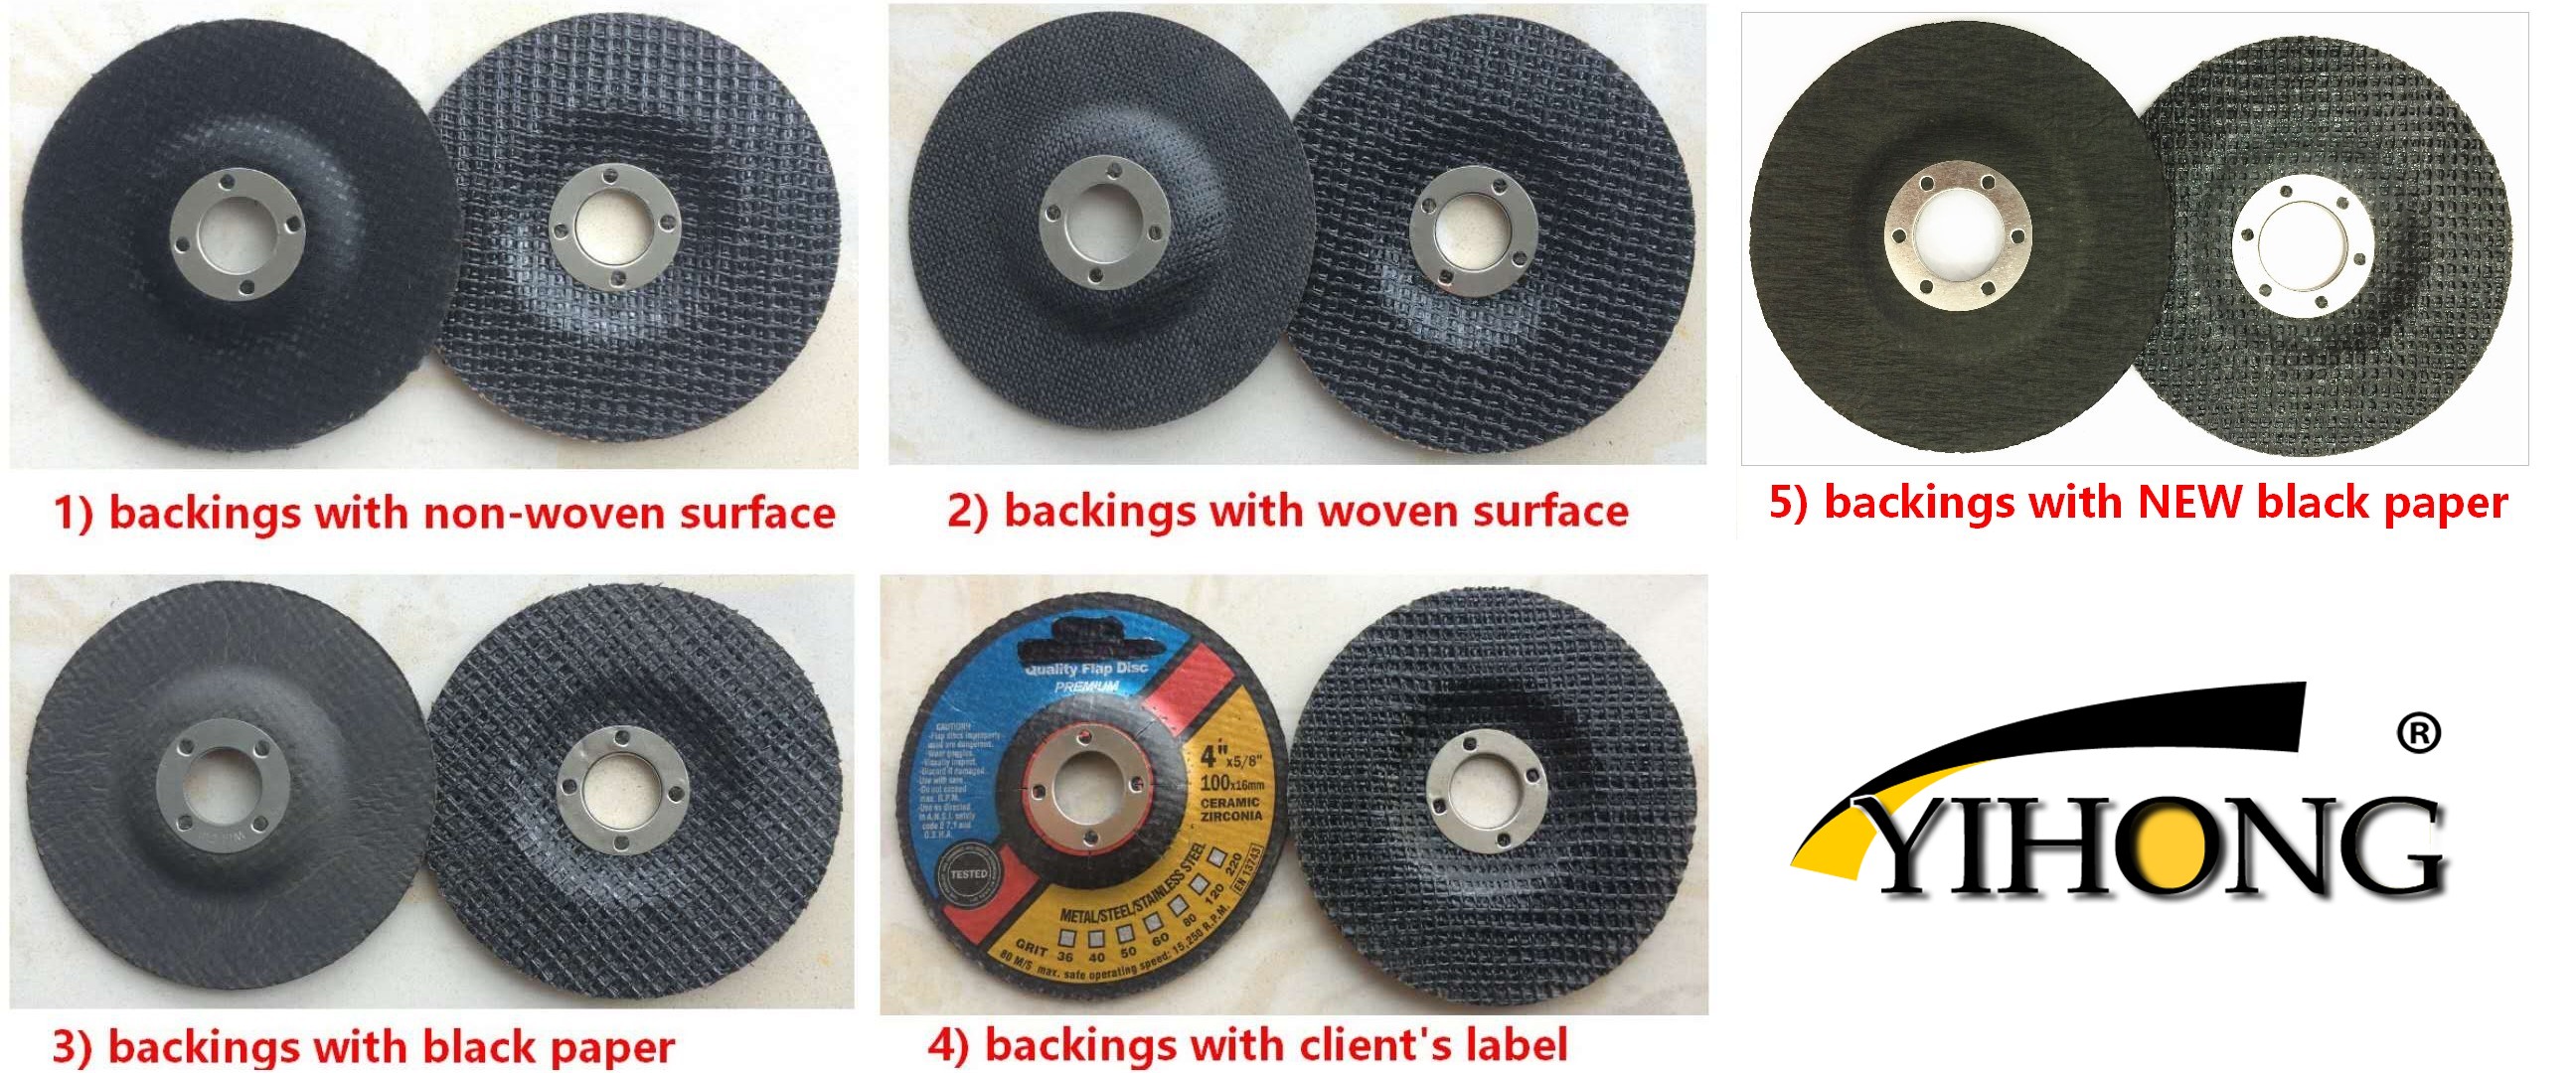 Yihong fiberglass backing plates for 20 years_Yihong abrasives_fiberglass backing pads_flap disc manufacturer_flap disc factory